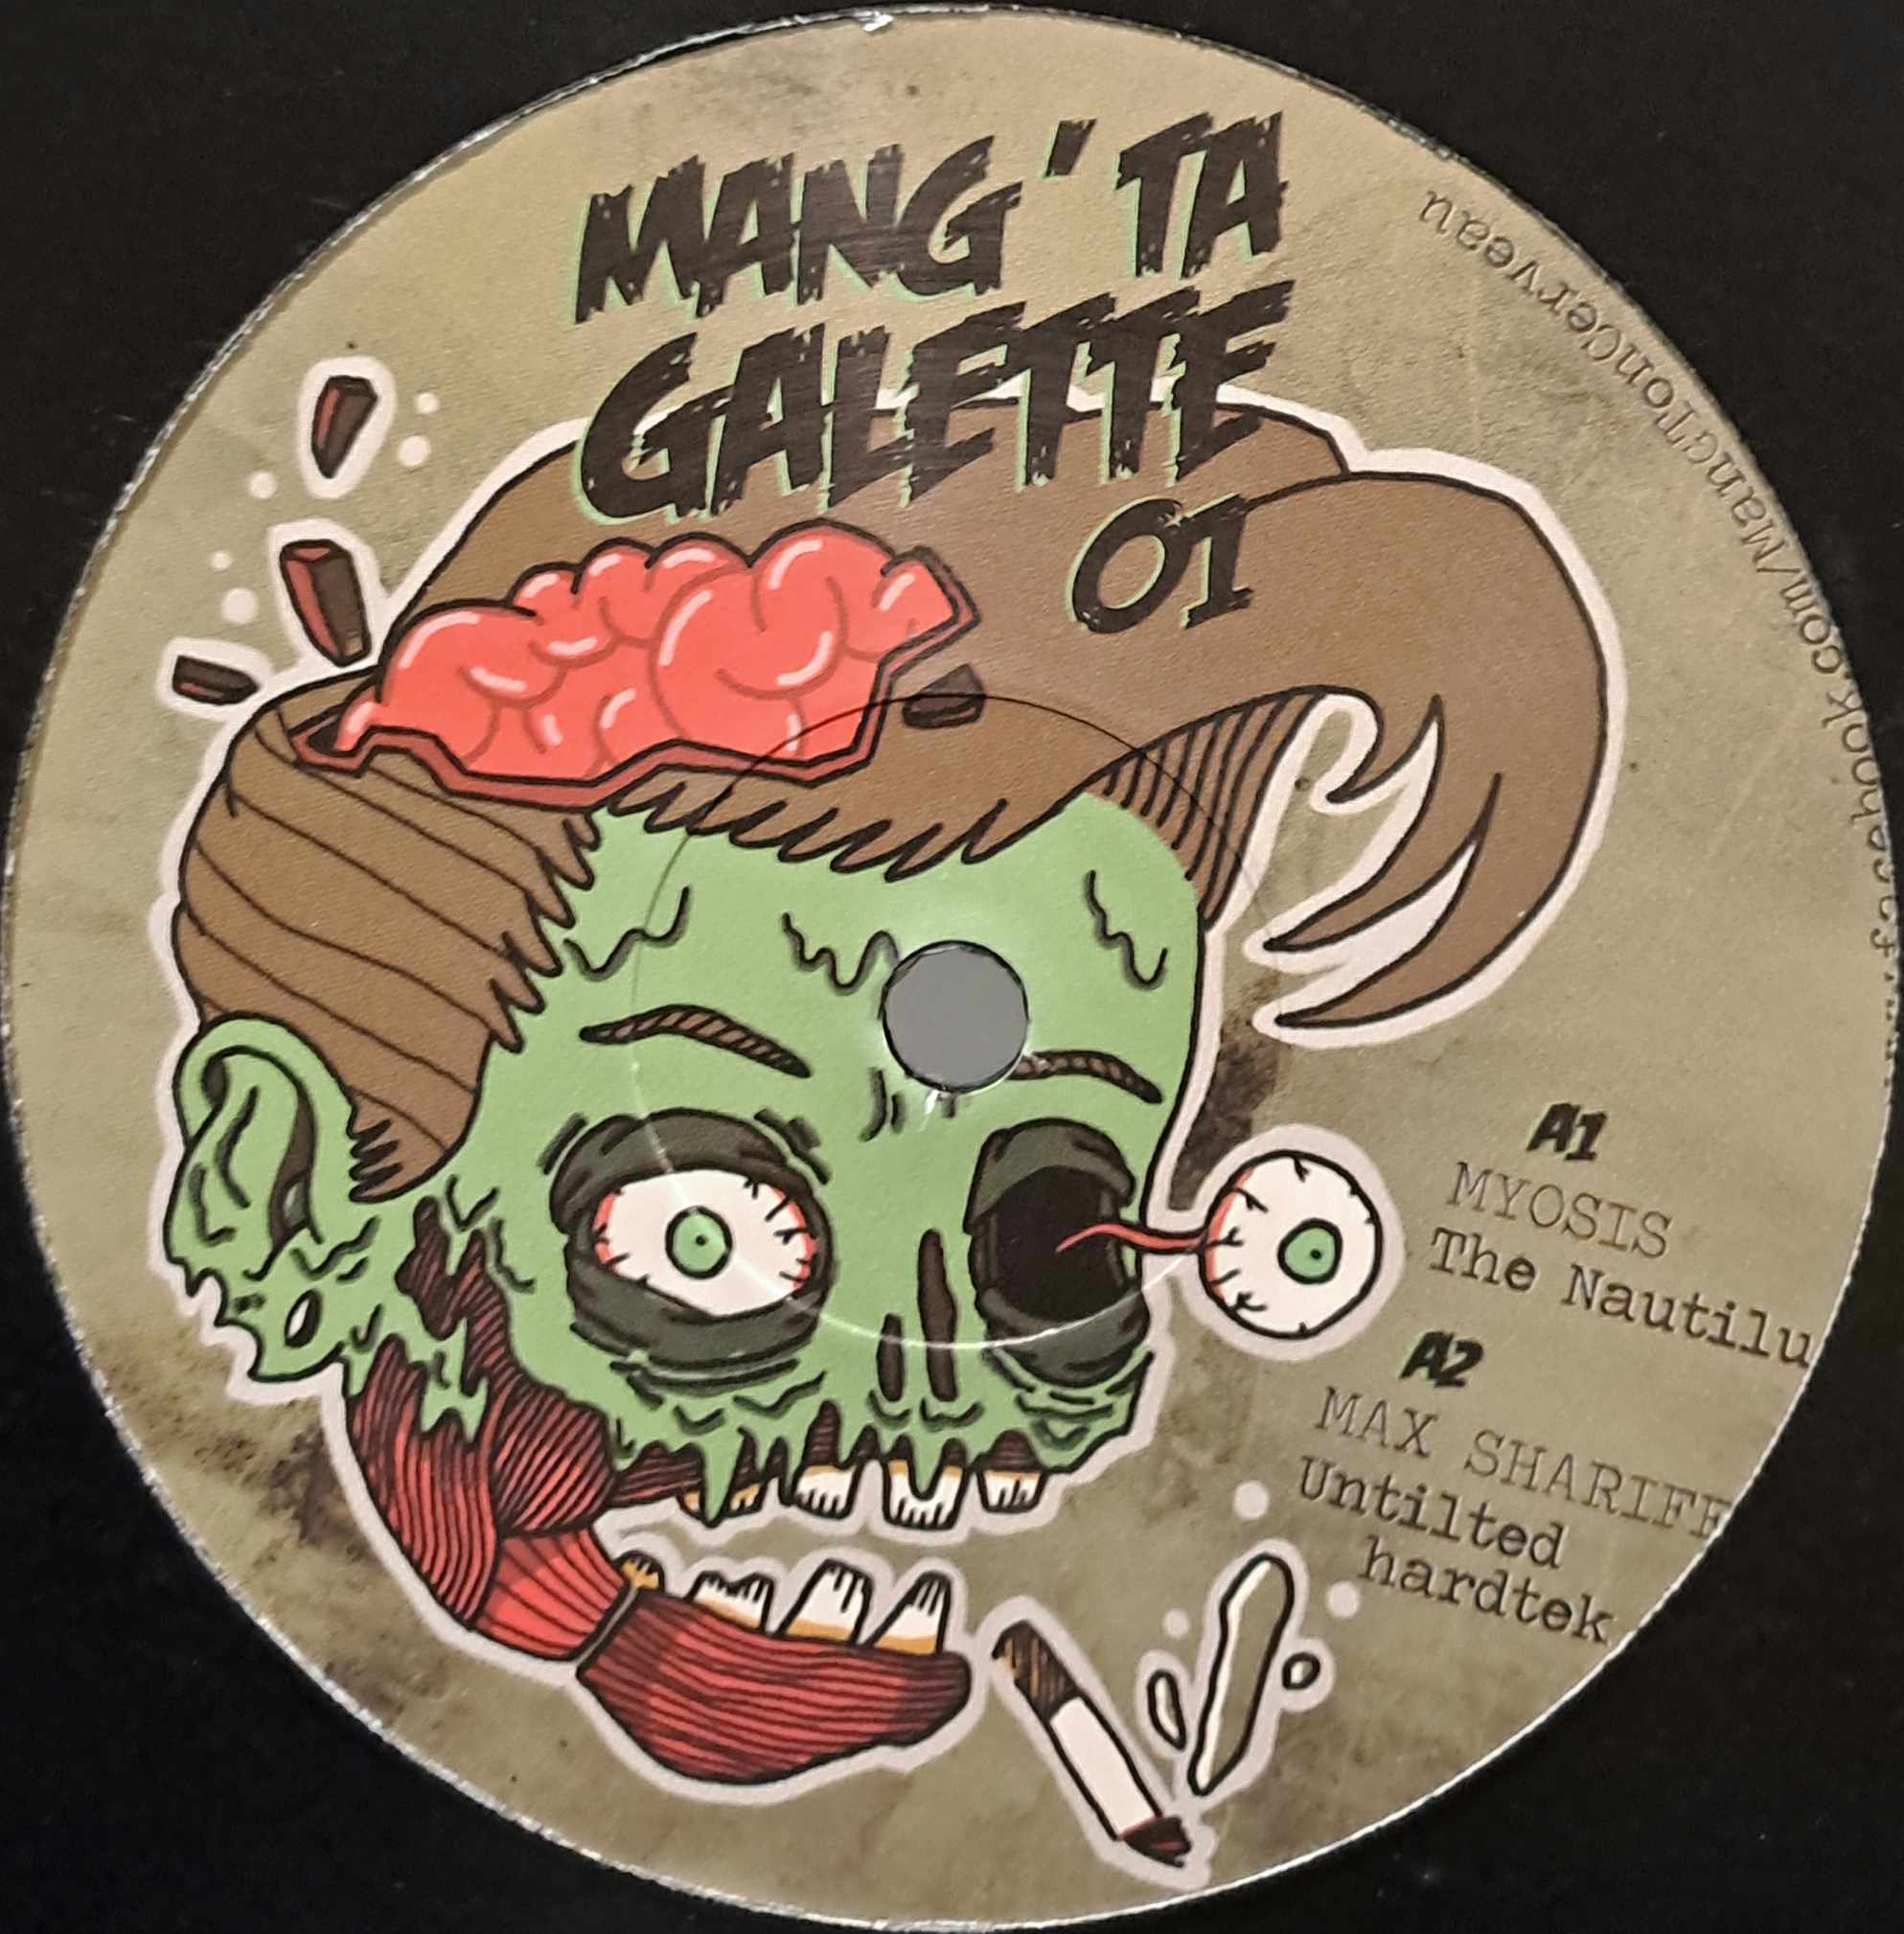 Mang' Ta Galette 01 - vinyle freetekno